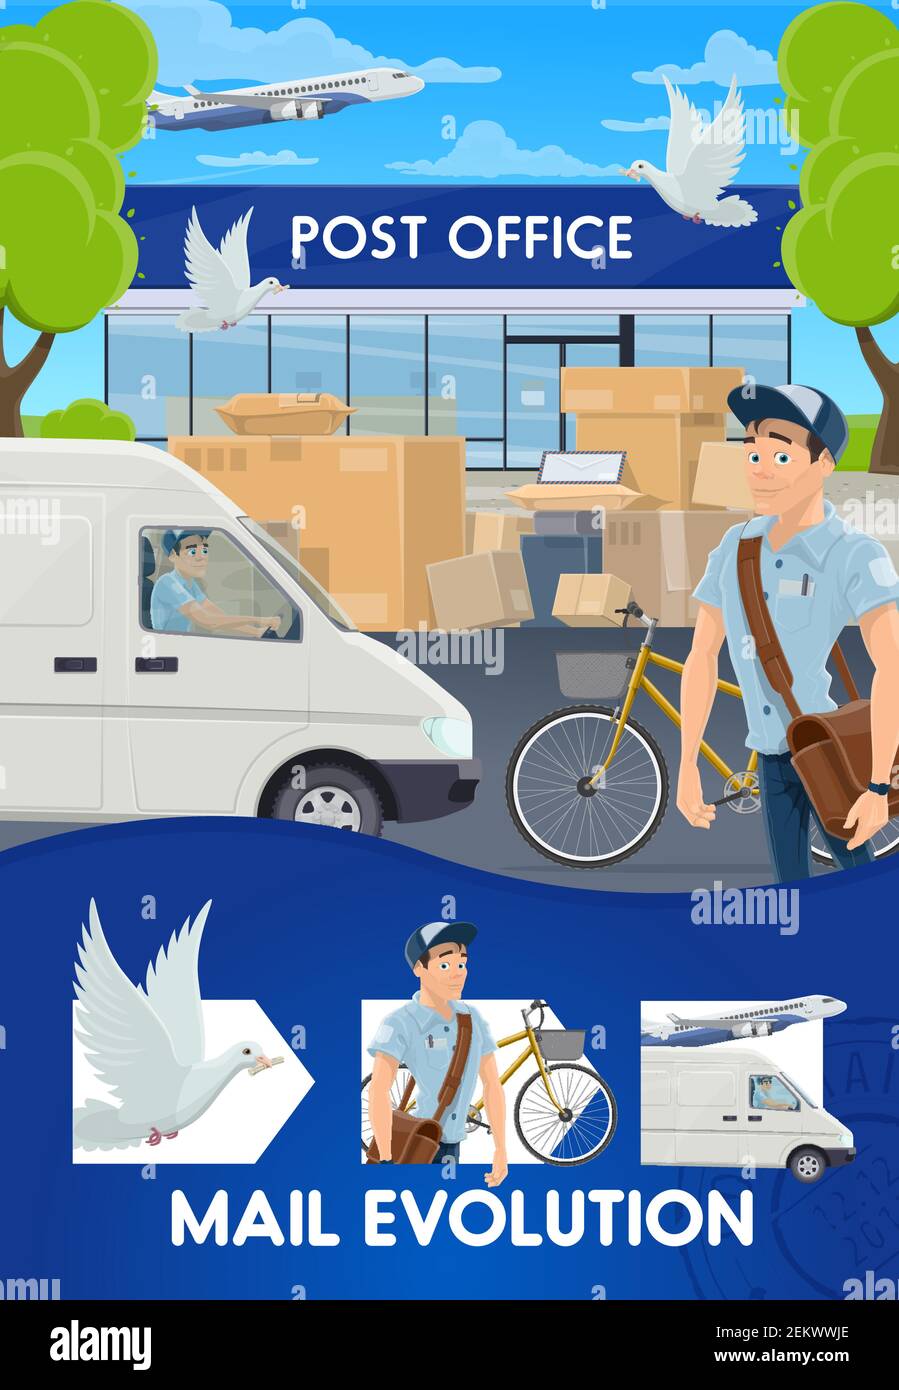 Mail delivery evolution, postal logistics and transportation service